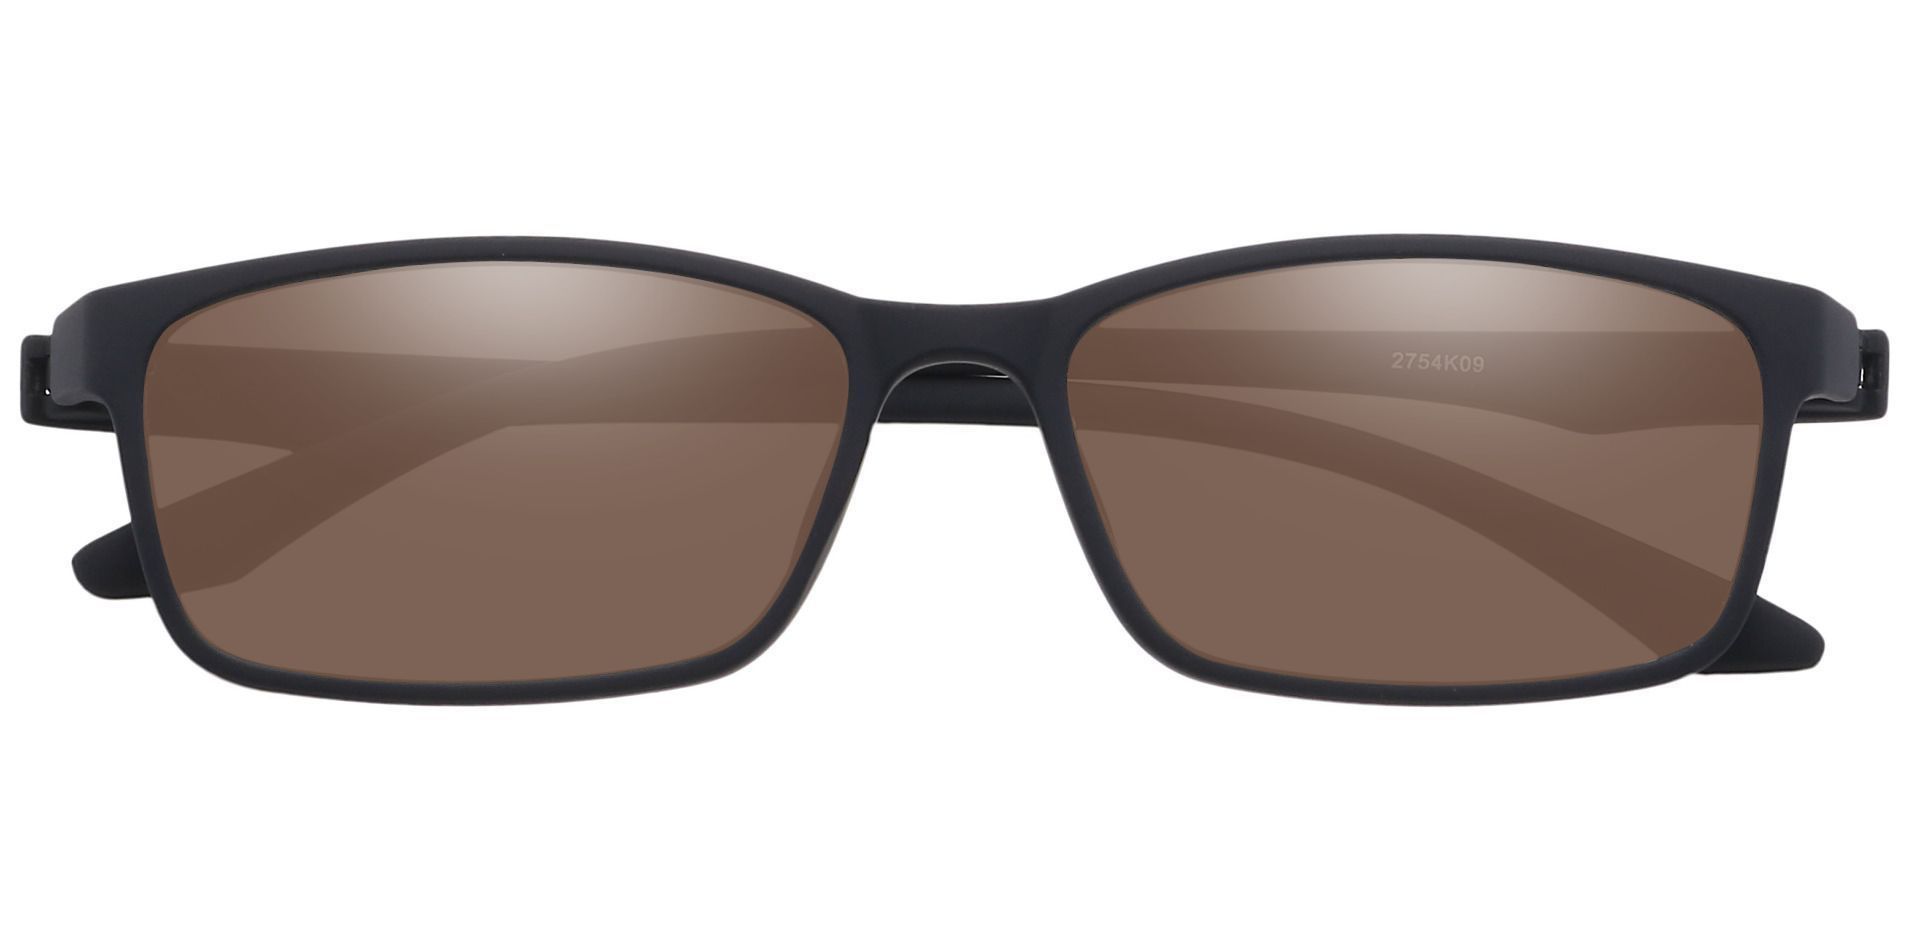 Wichita Rectangle Progressive Sunglasses -  Black Frame With Brown Lenses